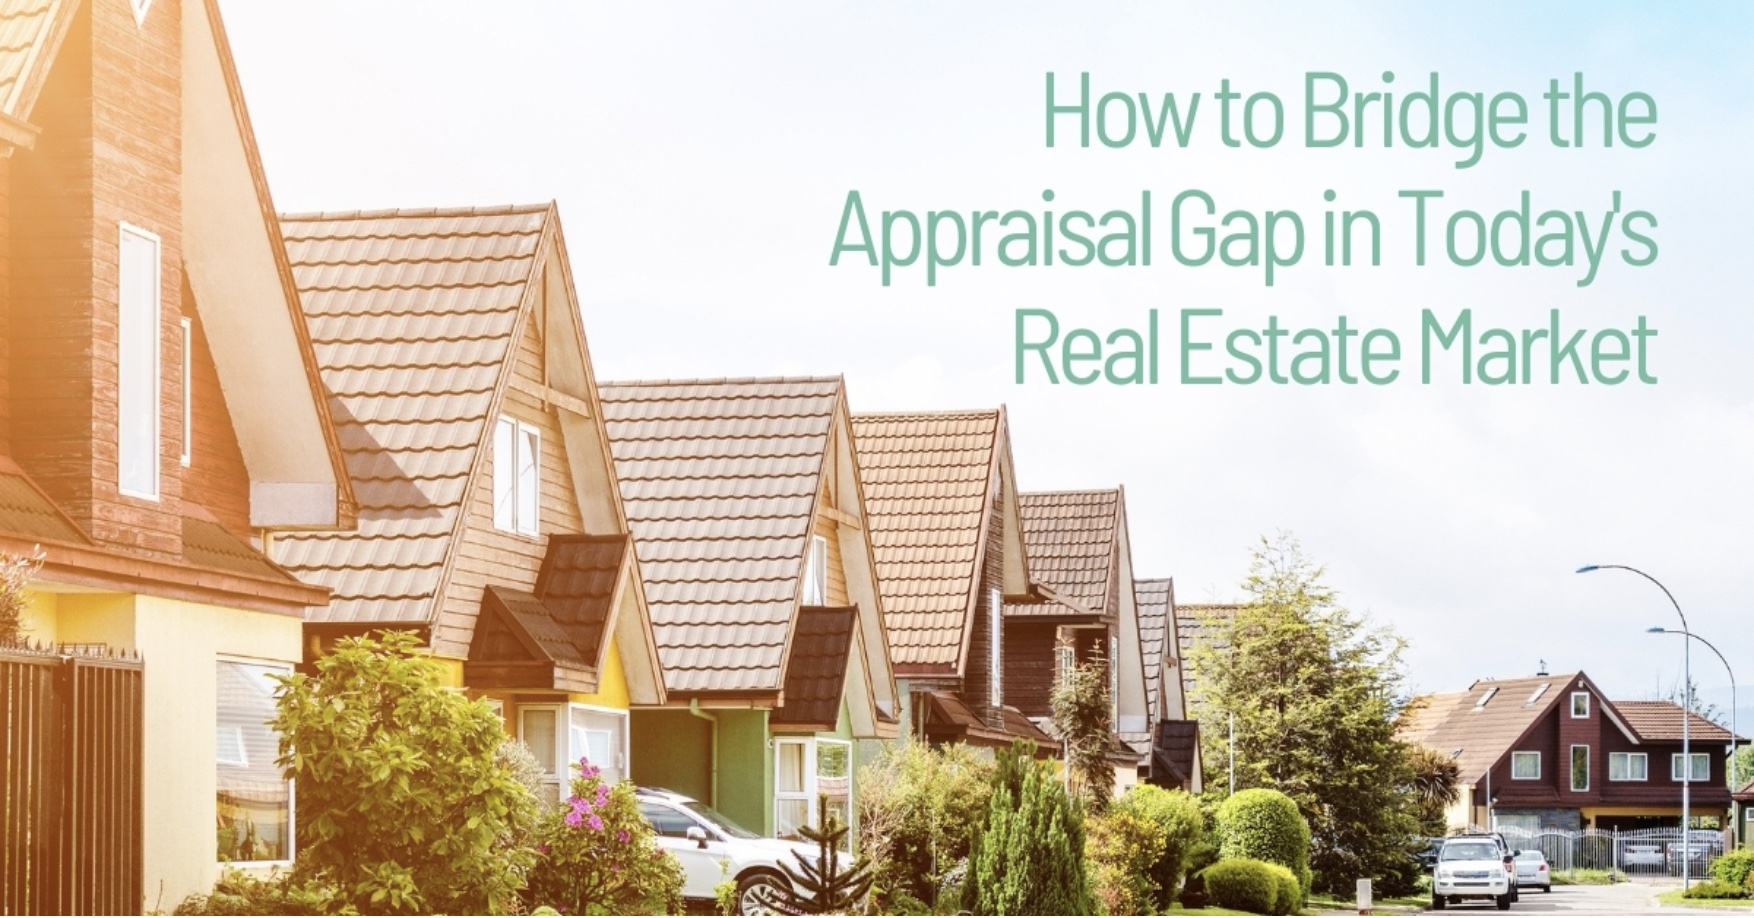 How to Bridge the Appraisal Gap